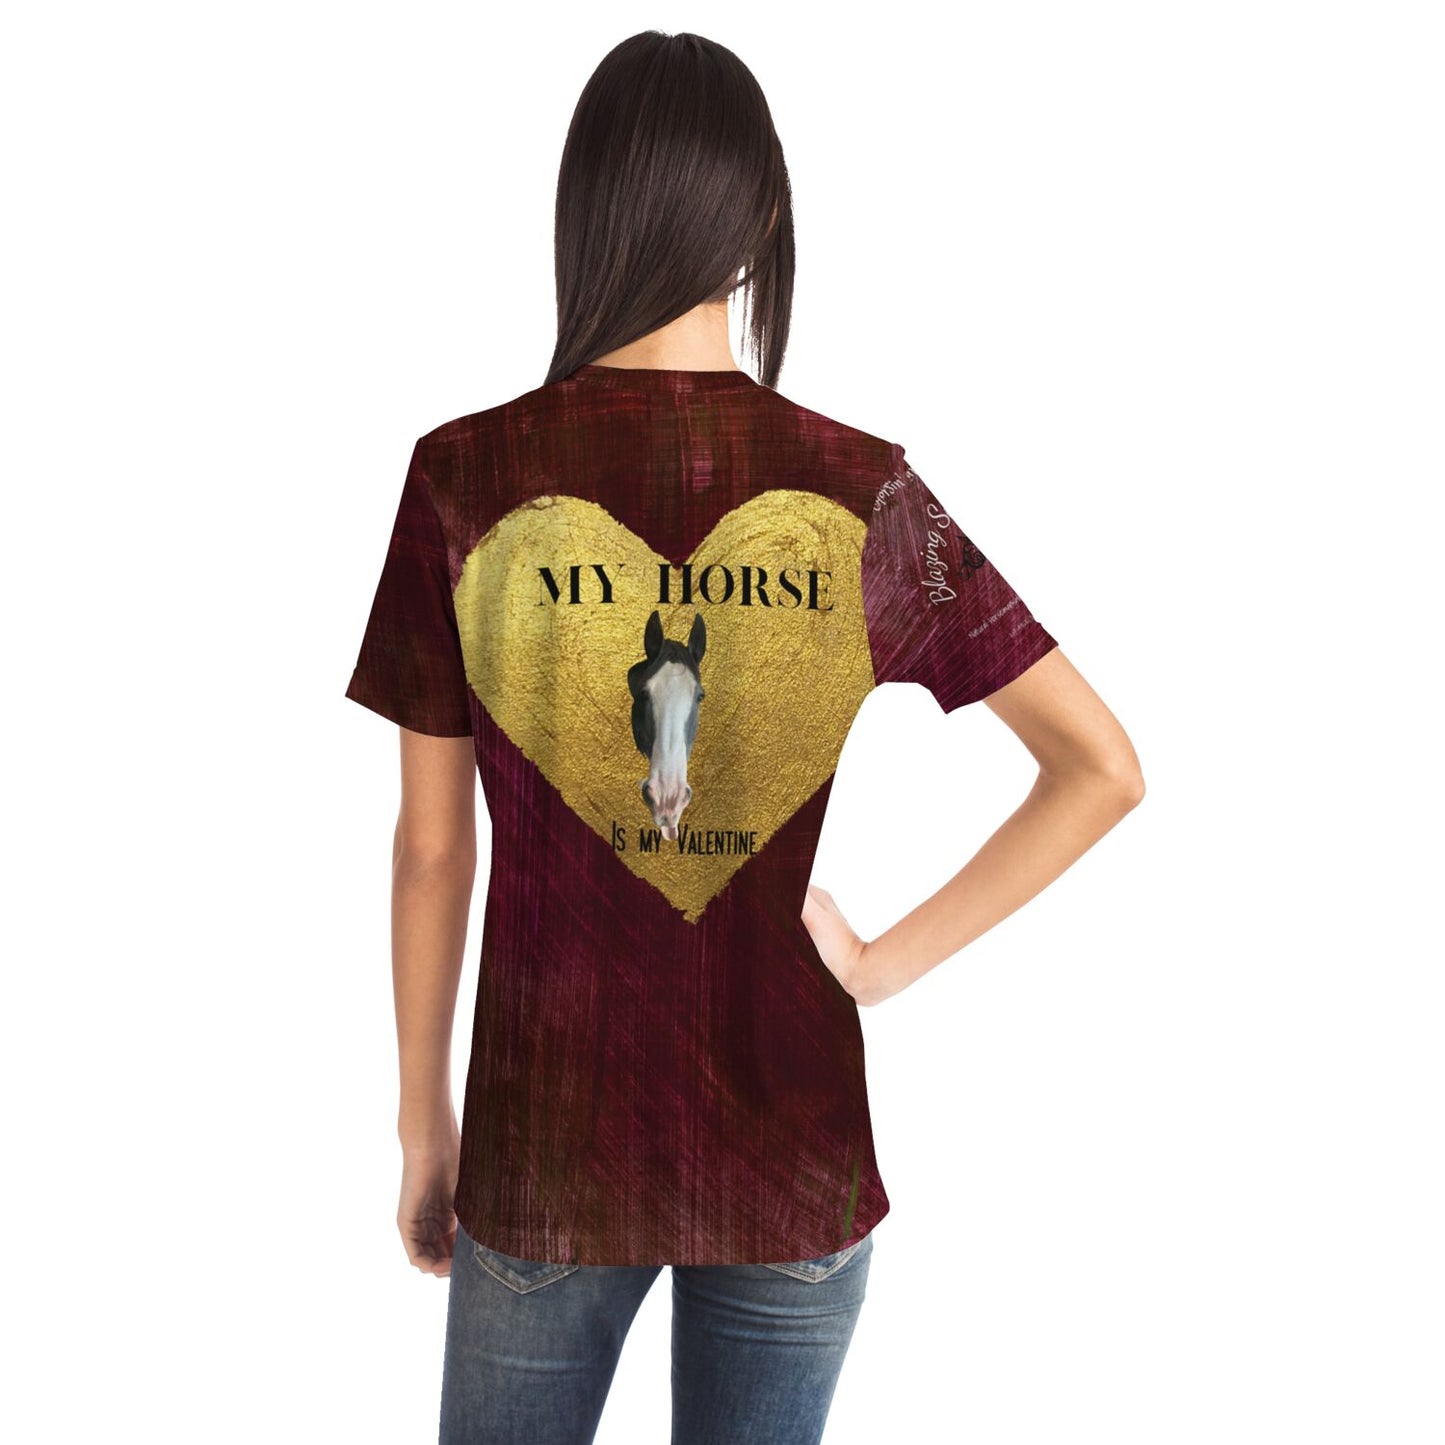 My Horse is my Valentine. T-shirt